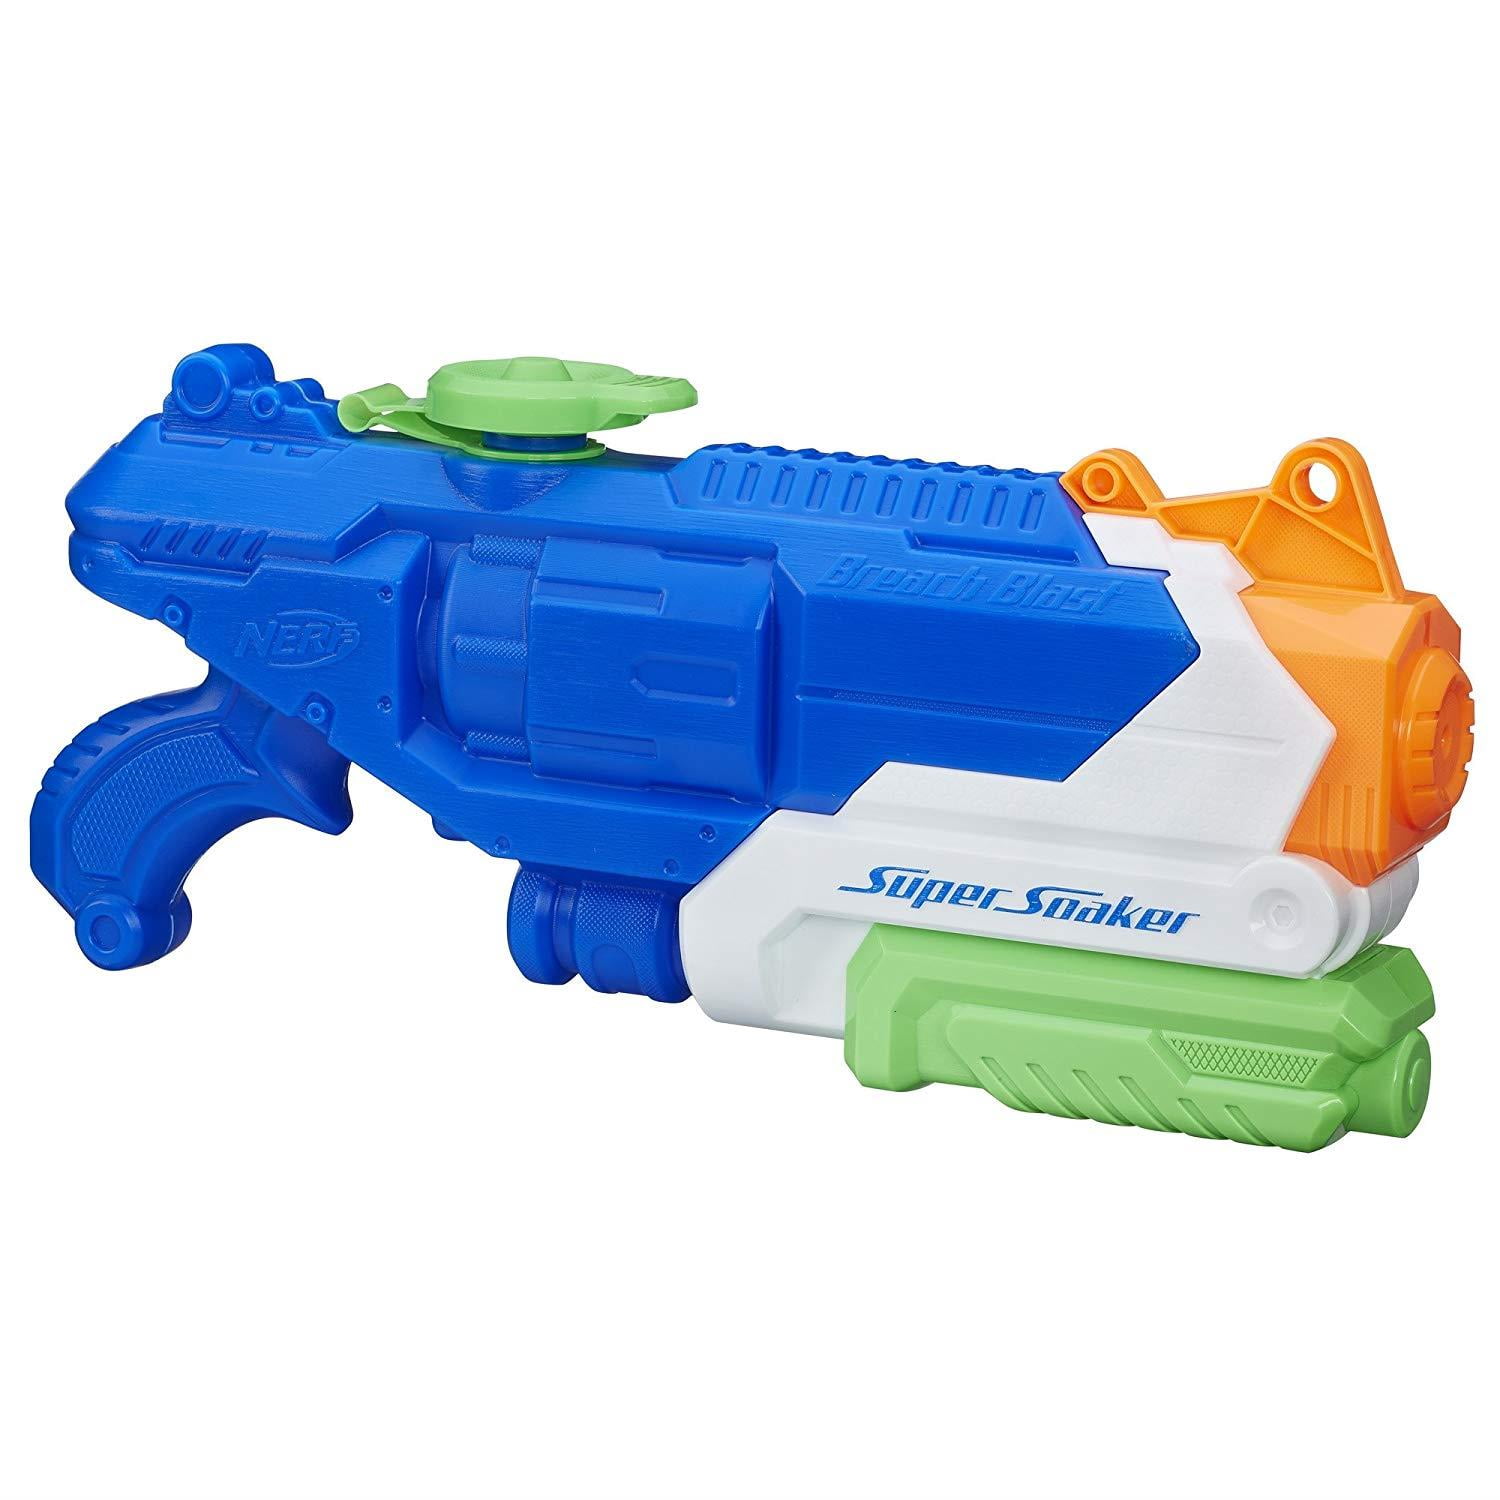 NERF Super Soaker Water Squirt Gun Blaster Clip Refill Banana High Capacity NEW 